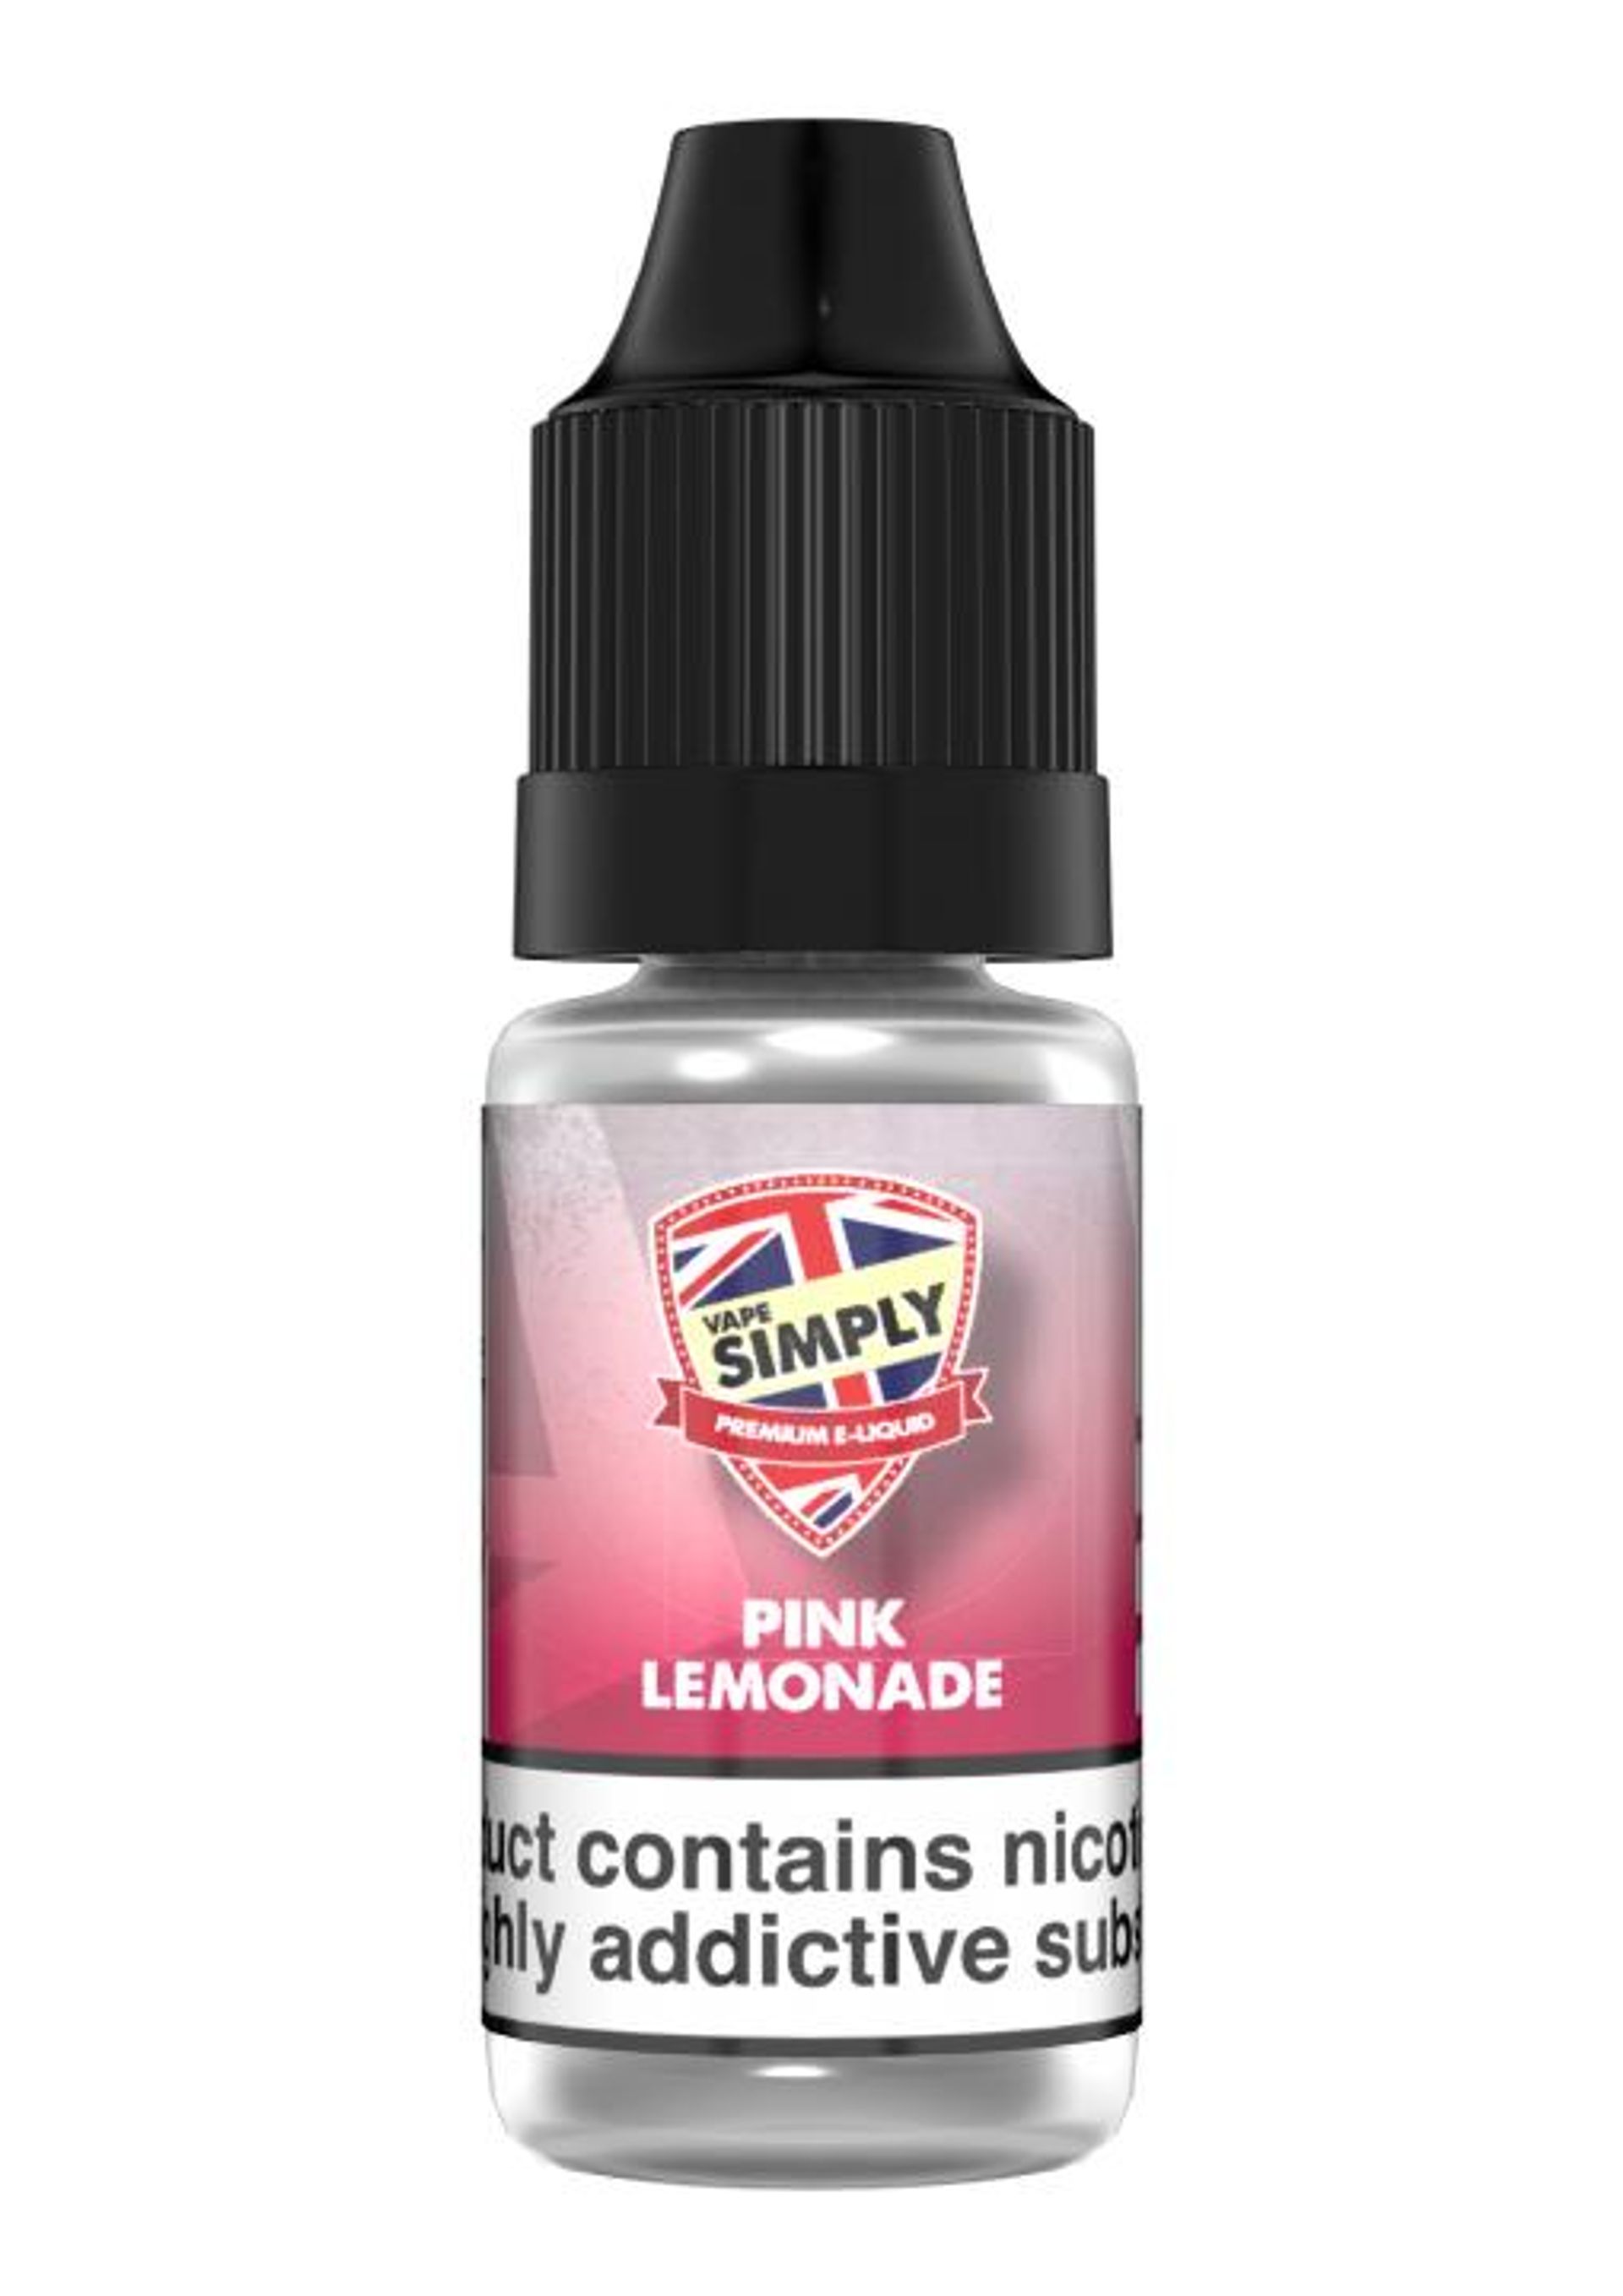 Image of Pink Lemonade by Vape Simply